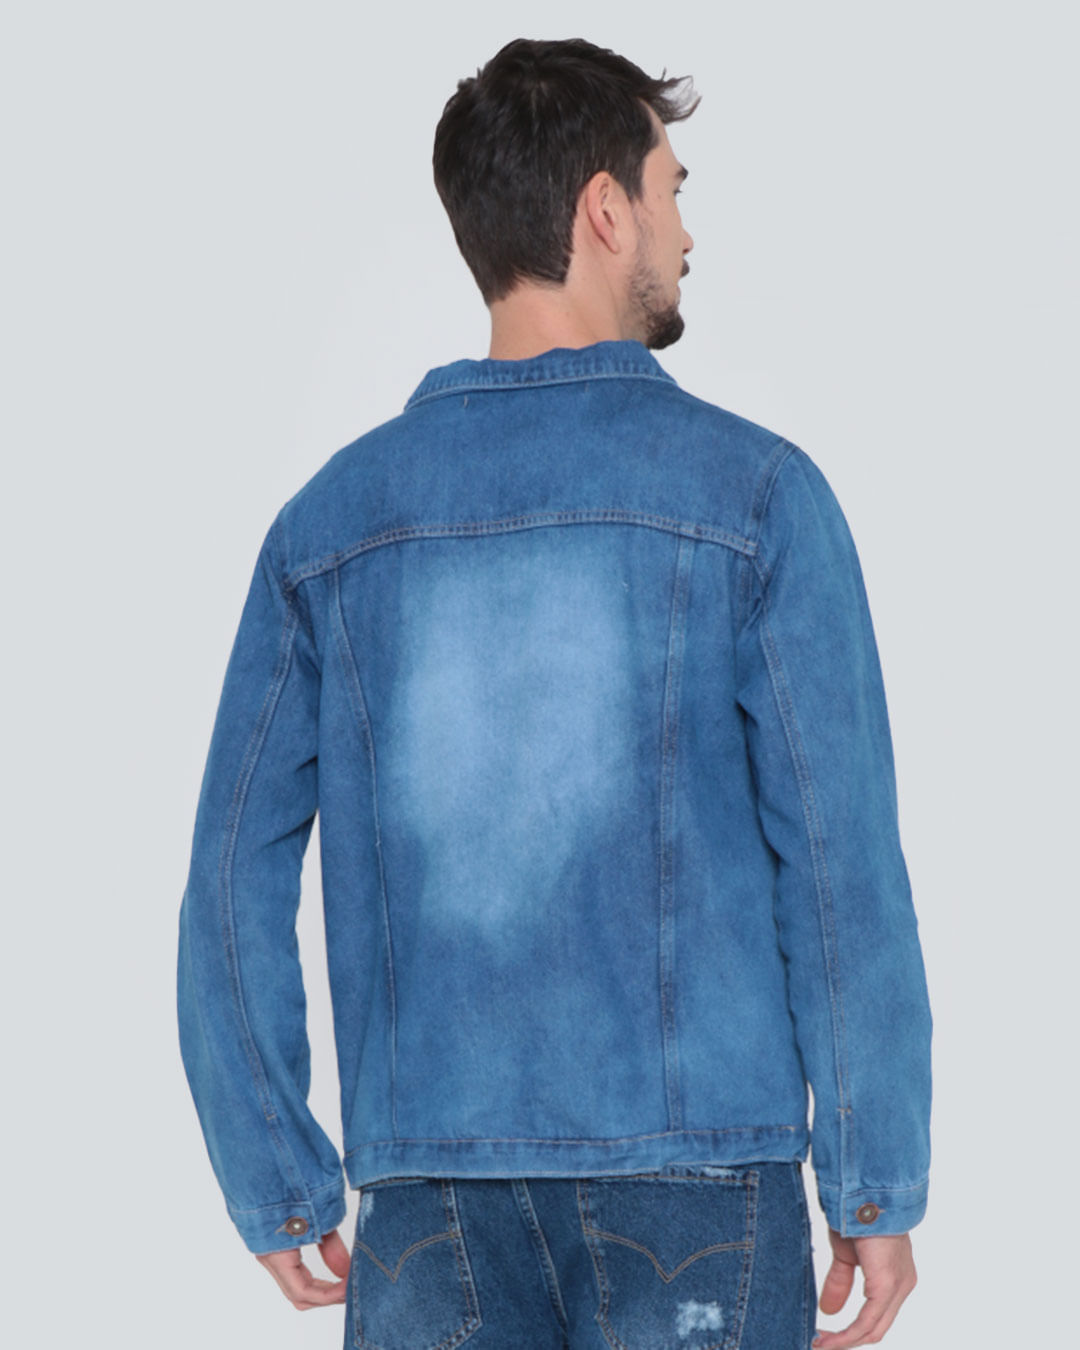 Jaqueta-Jeans-Masculina-Destroyed-Azul